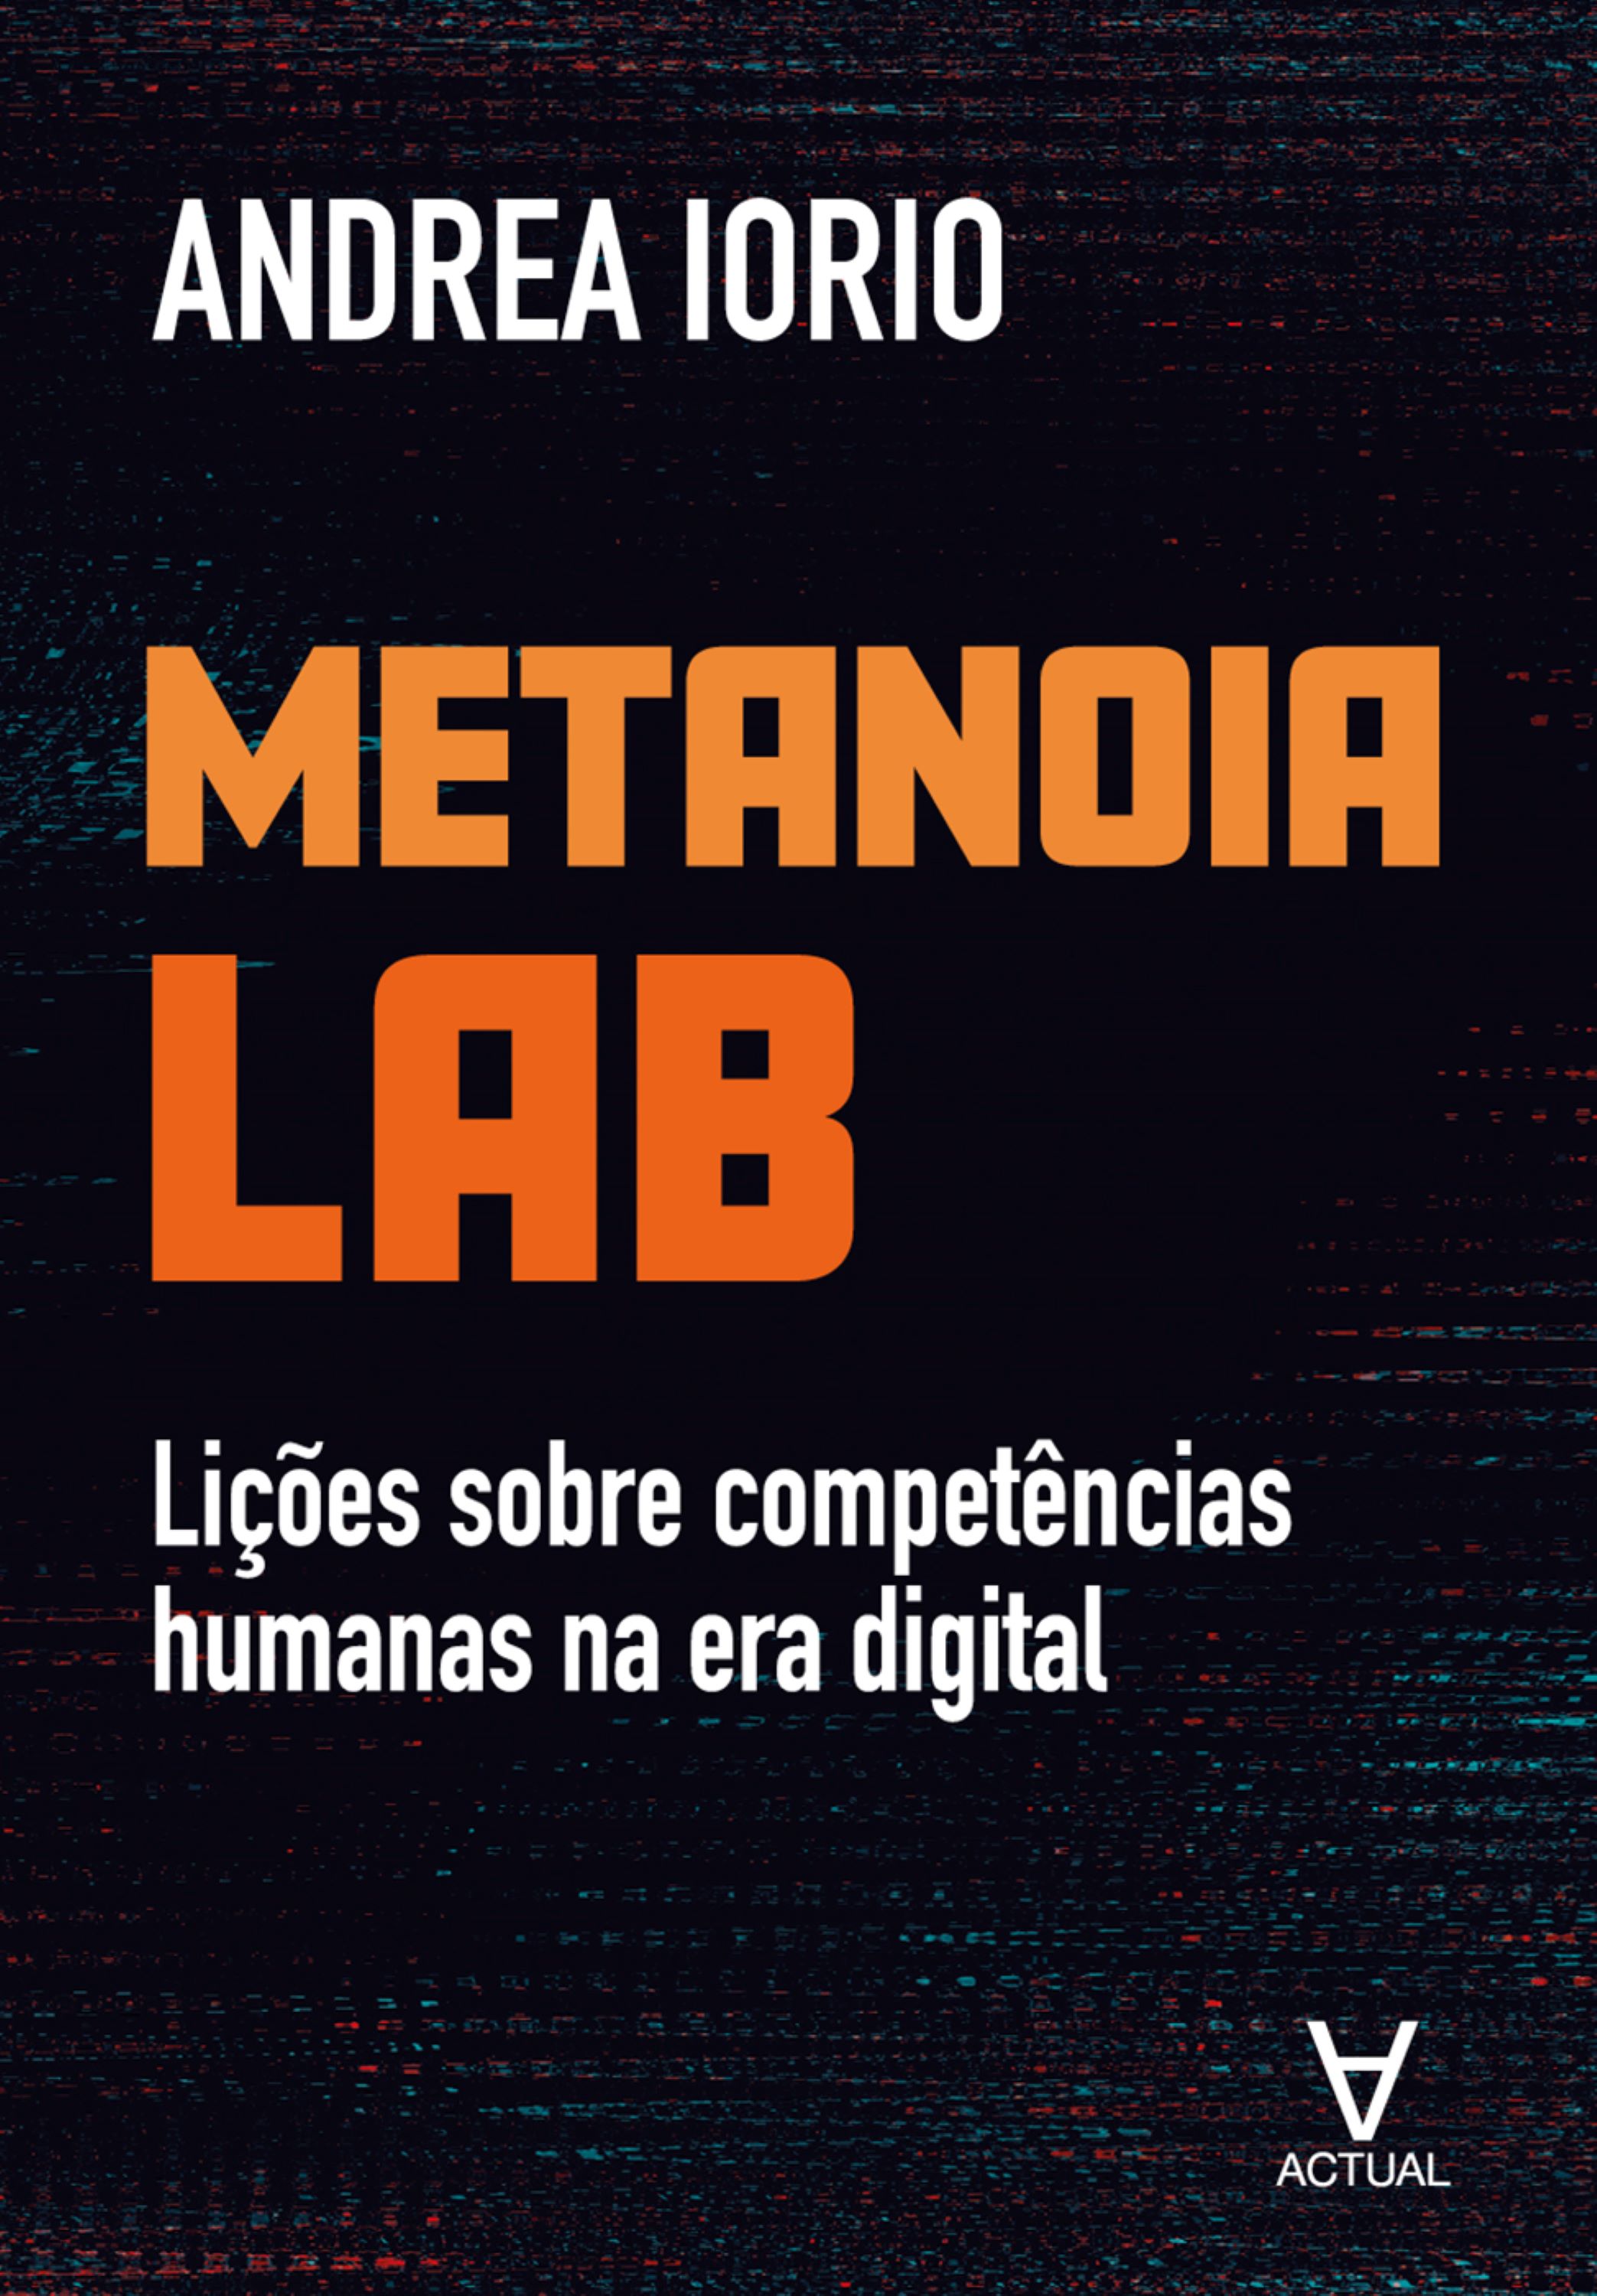 Metanoia Lab